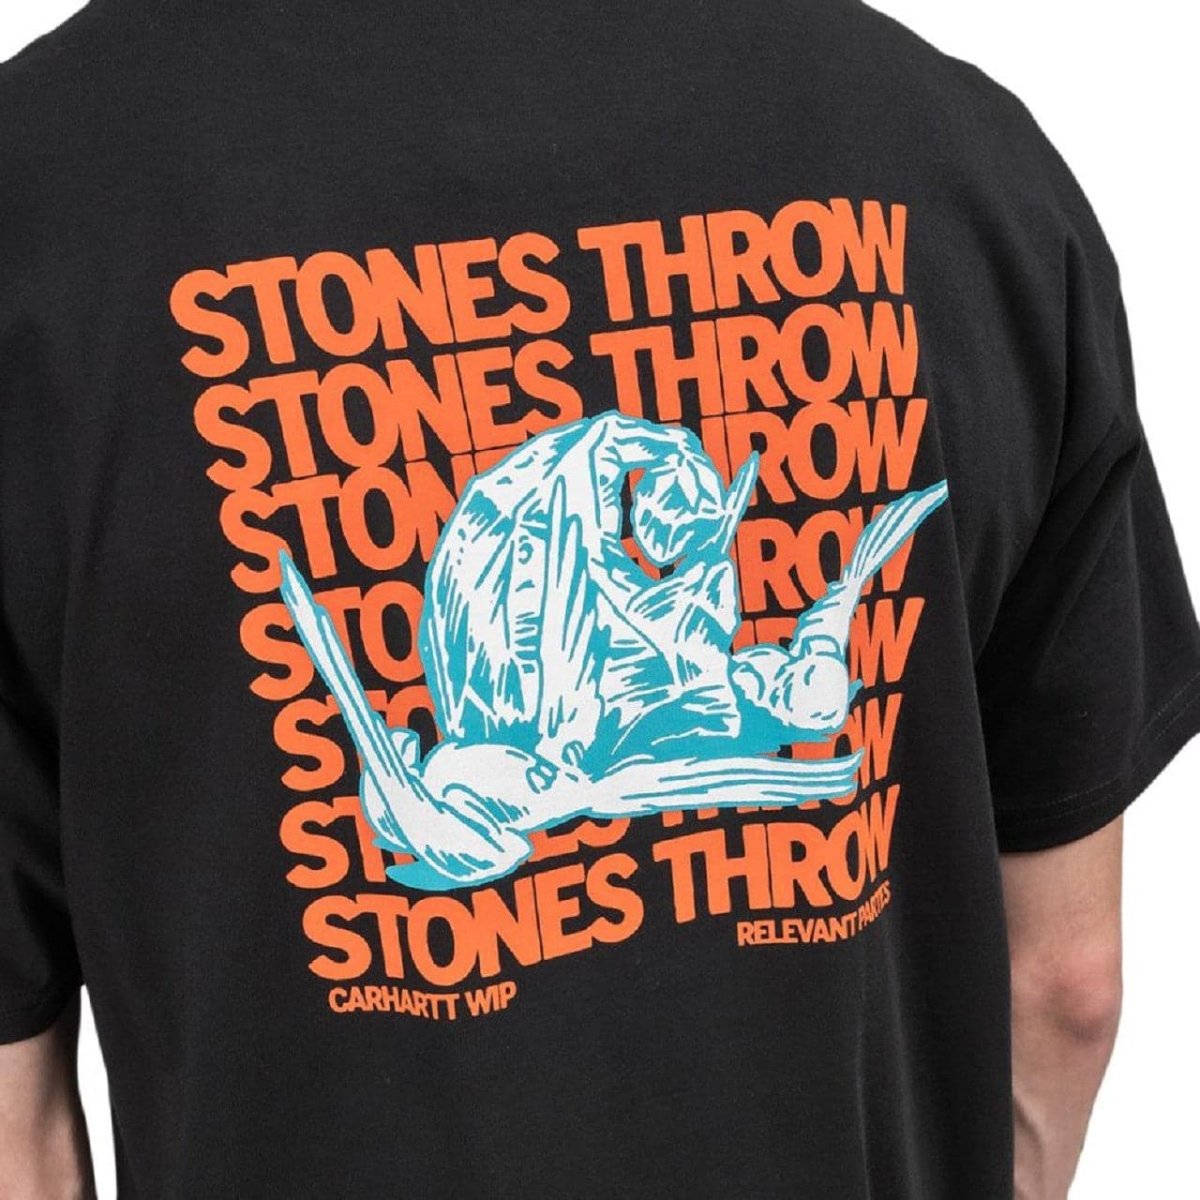 Carhartt WIP x Relevant Parties Stones Throw T-Shirt (Schwarz)  - Allike Store